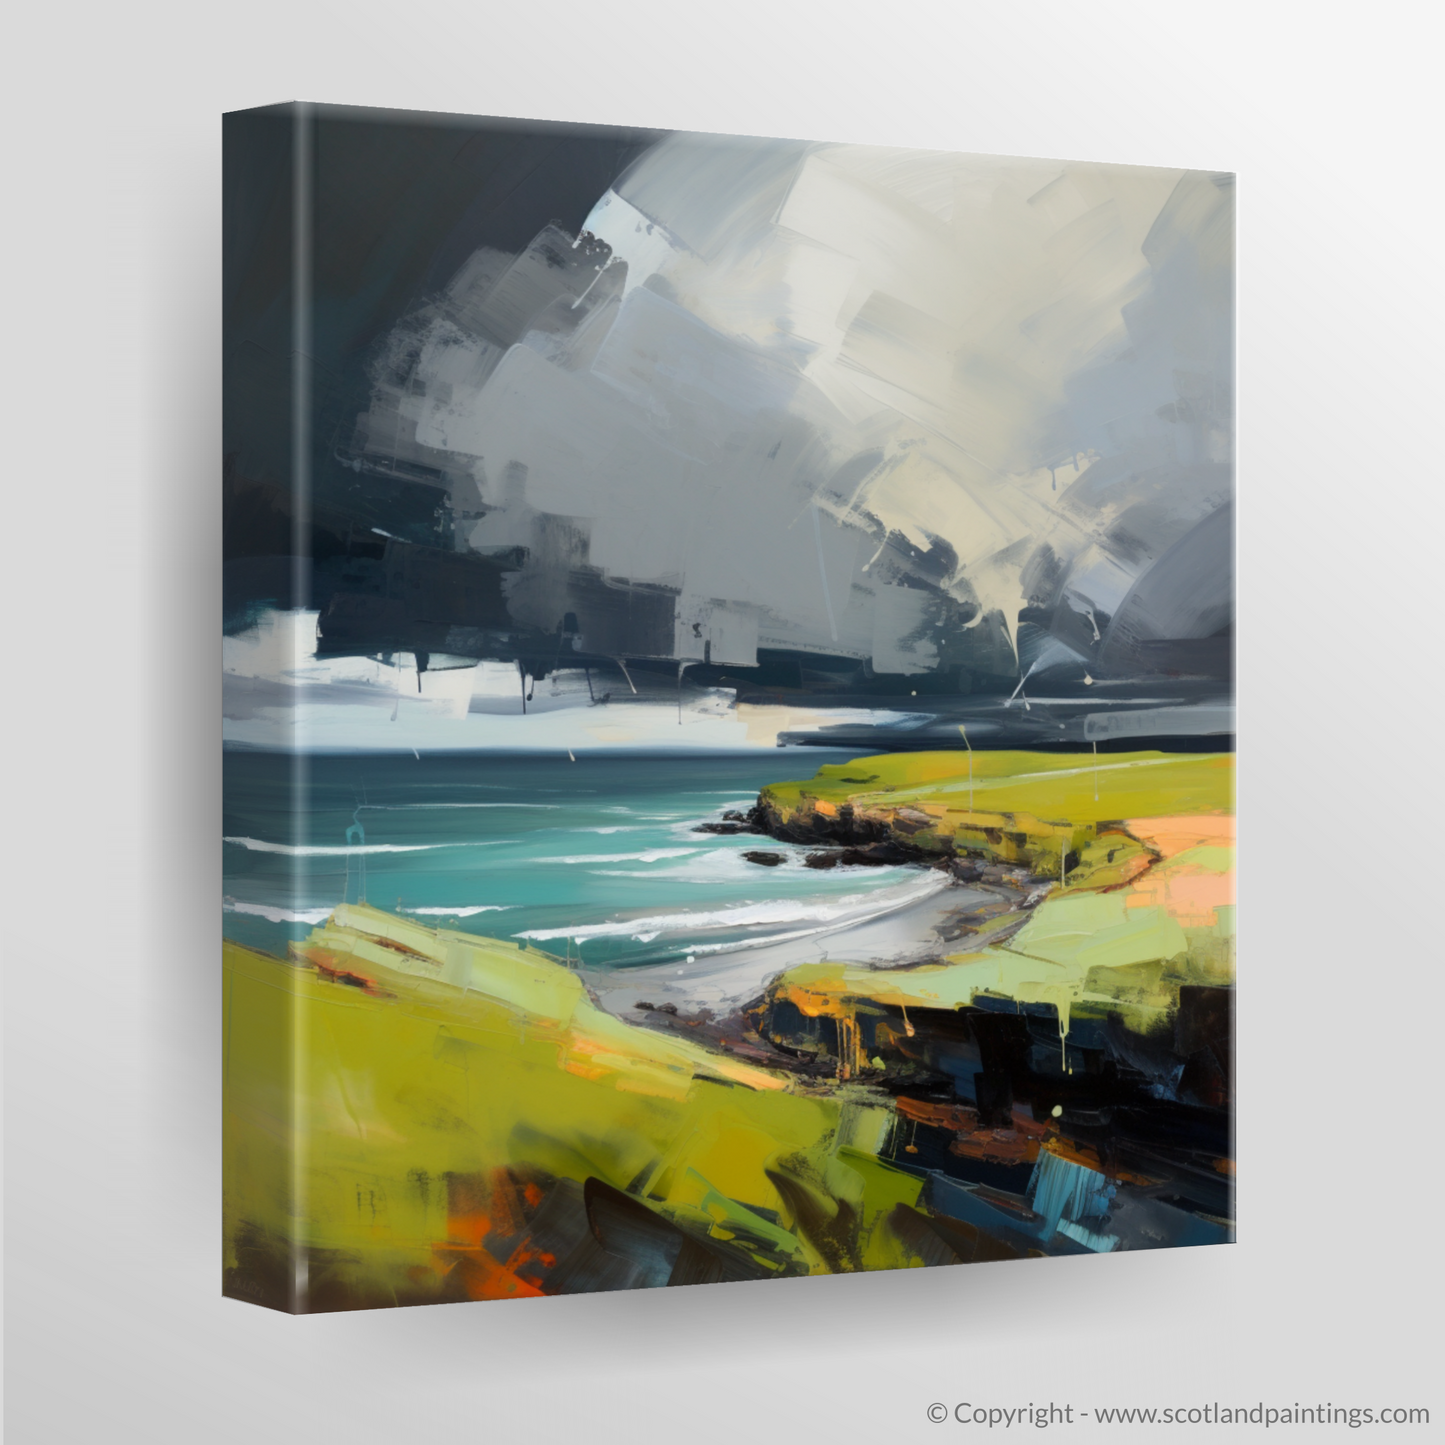 Storm Over Coldingham Bay: A Contemporary Ode to Scottish Shores